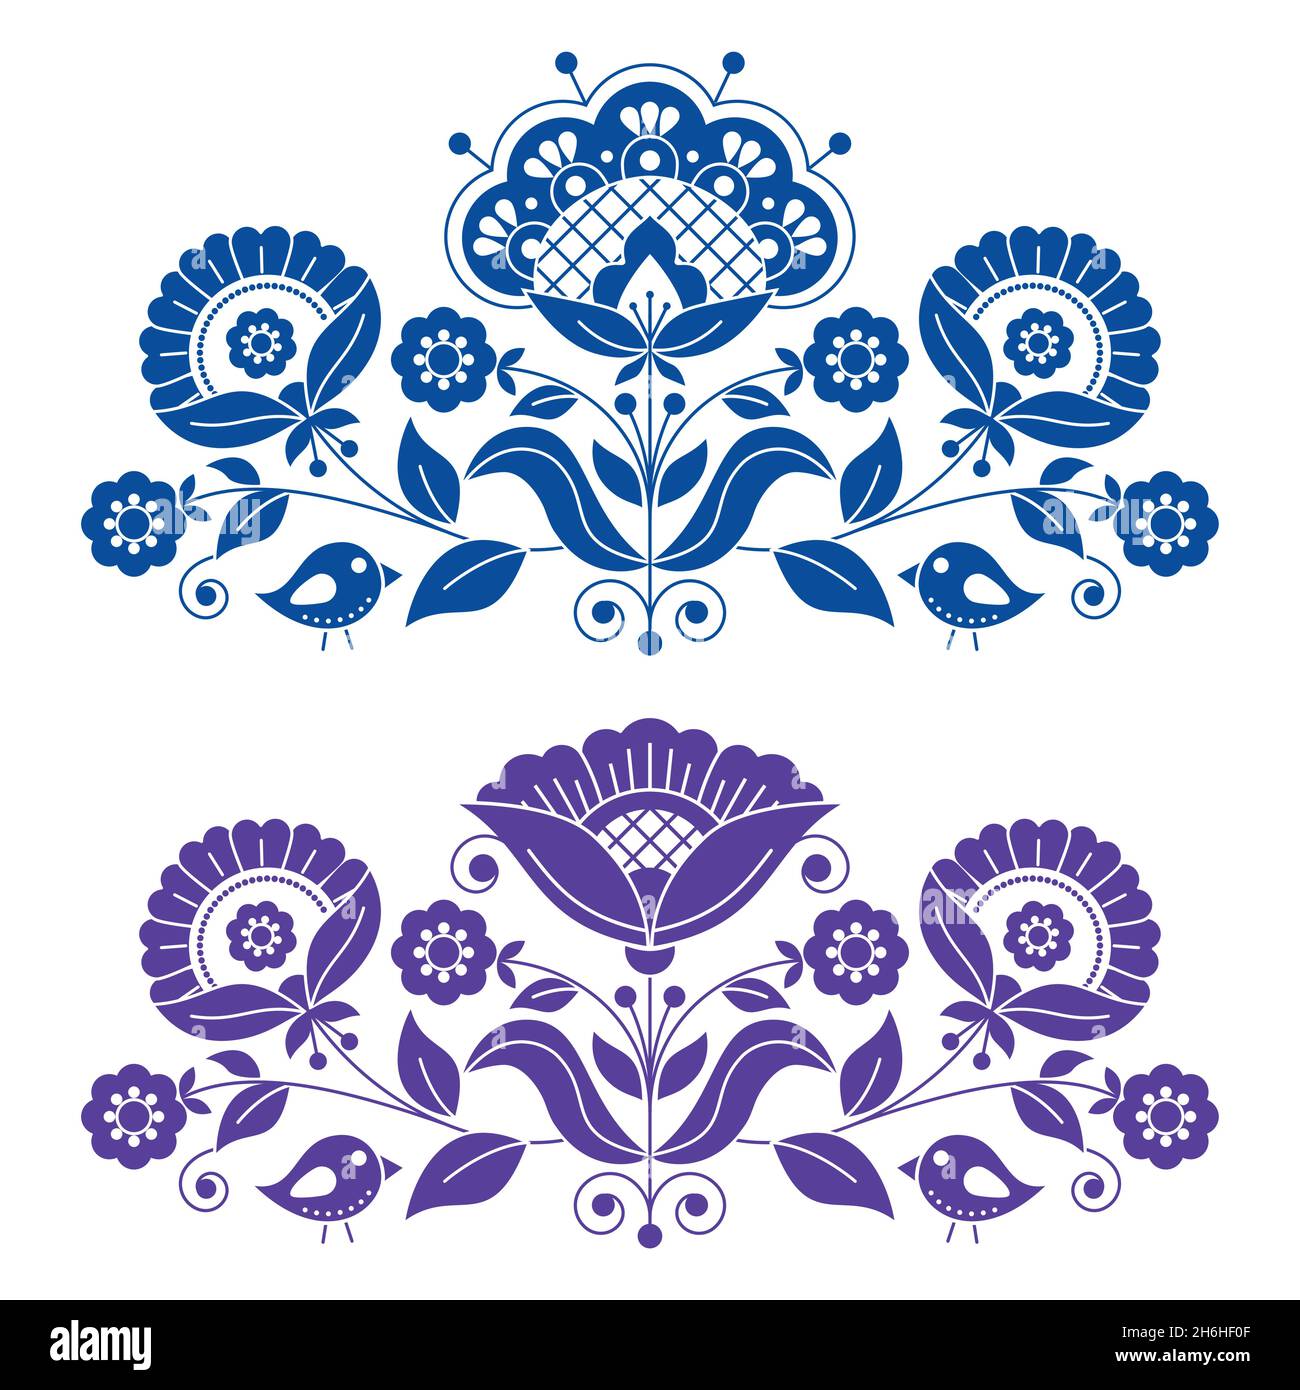 Swedish Floral Folk Art Vector Greeting Card Design Elements Inspired